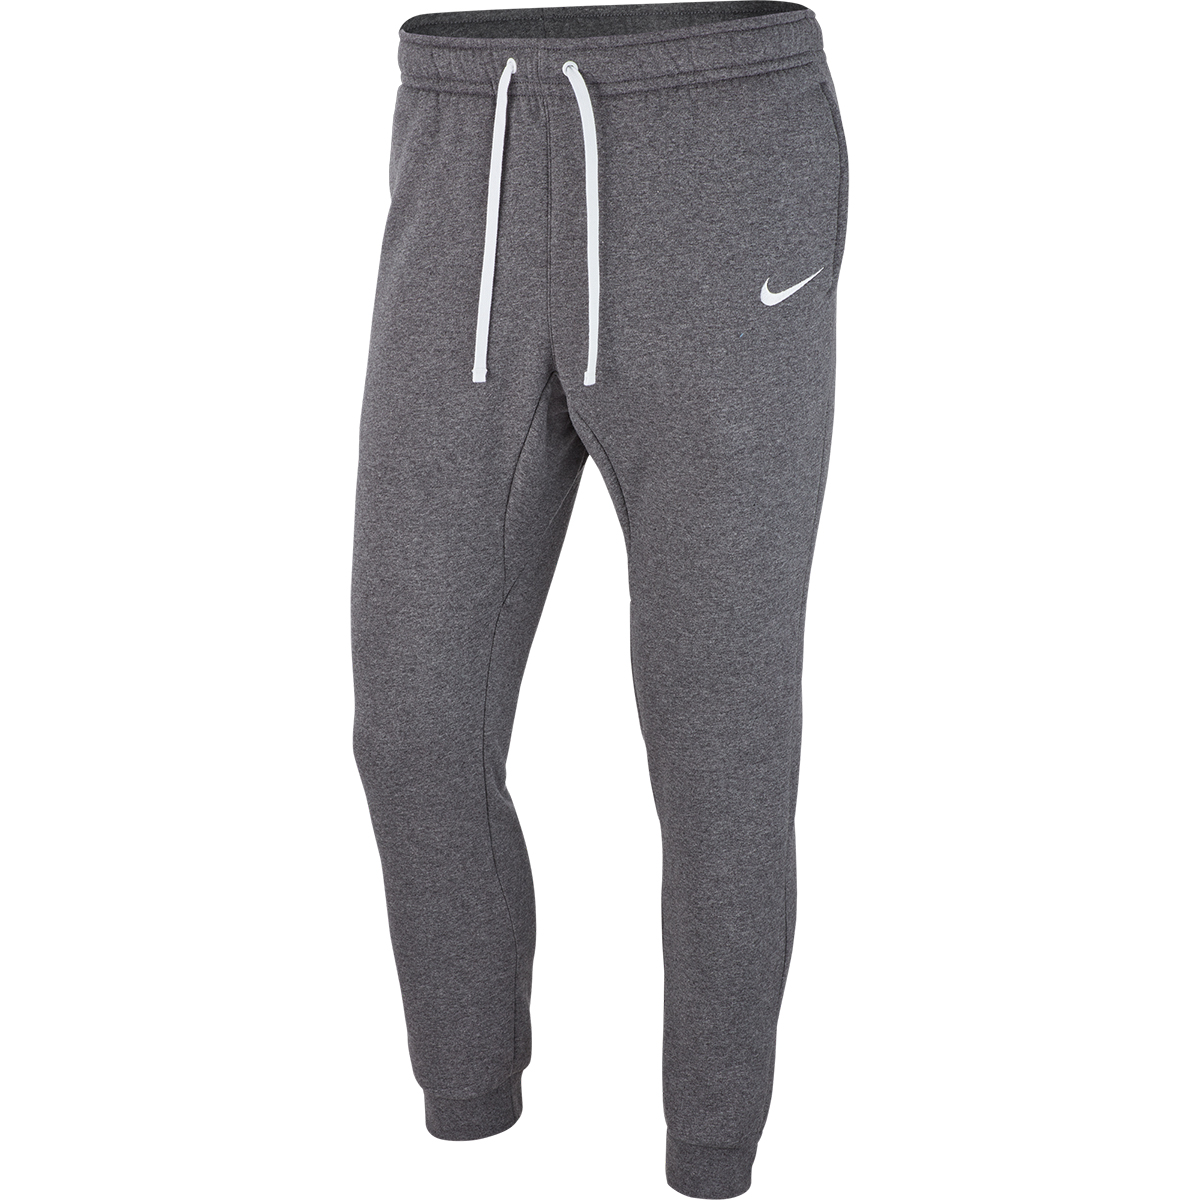 Nike Herren Trainingshose TEAM CLUB 19 Pants grau Jogginghose